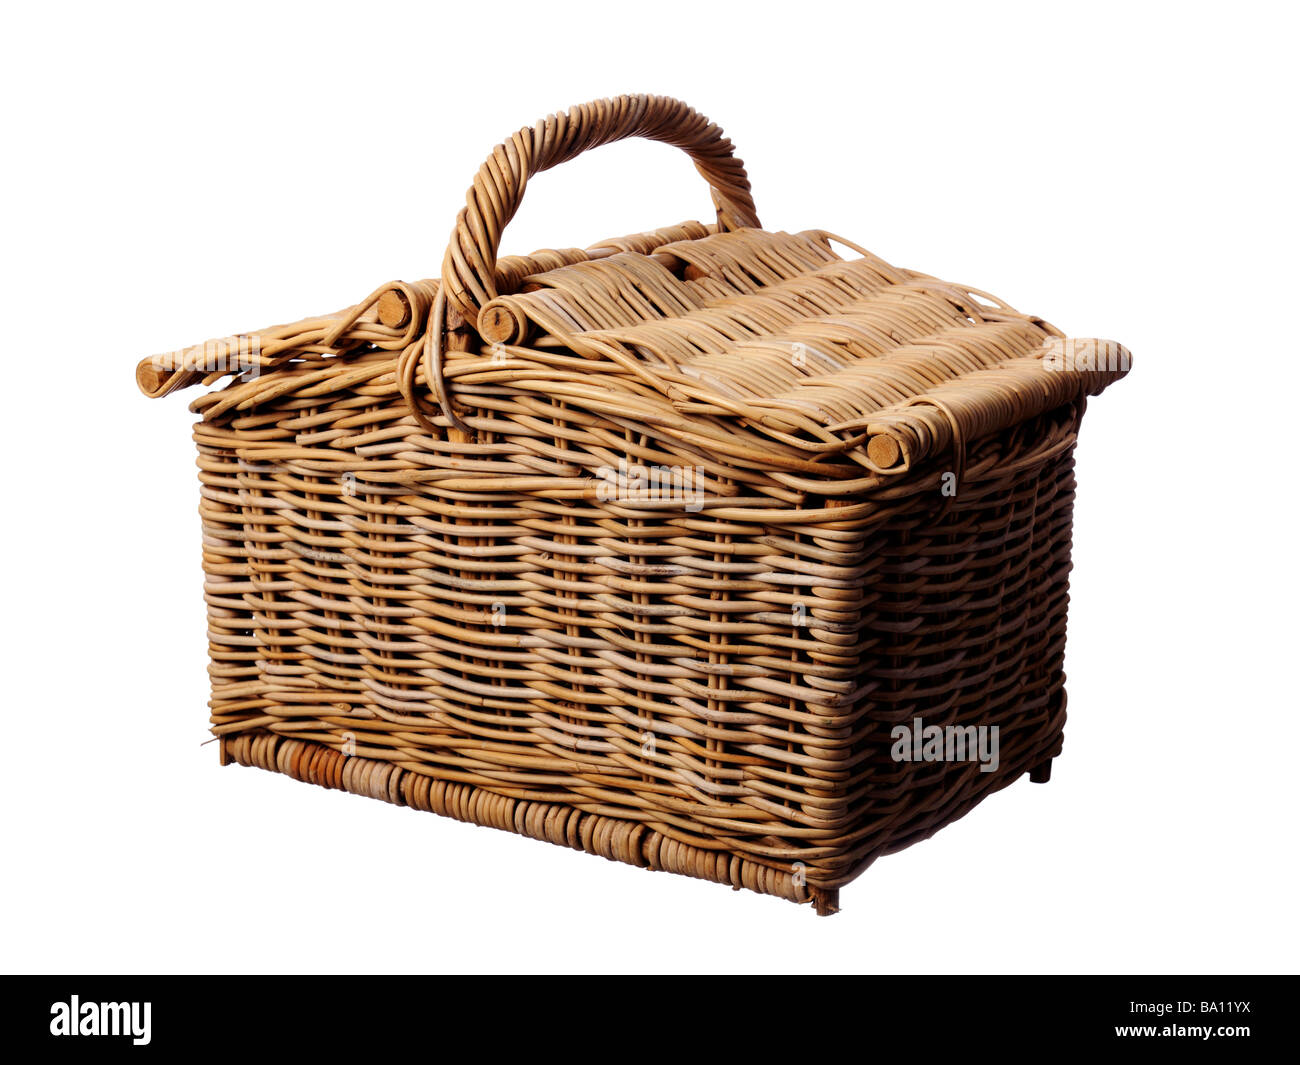 traditional wicker picnic basket Stock Photo